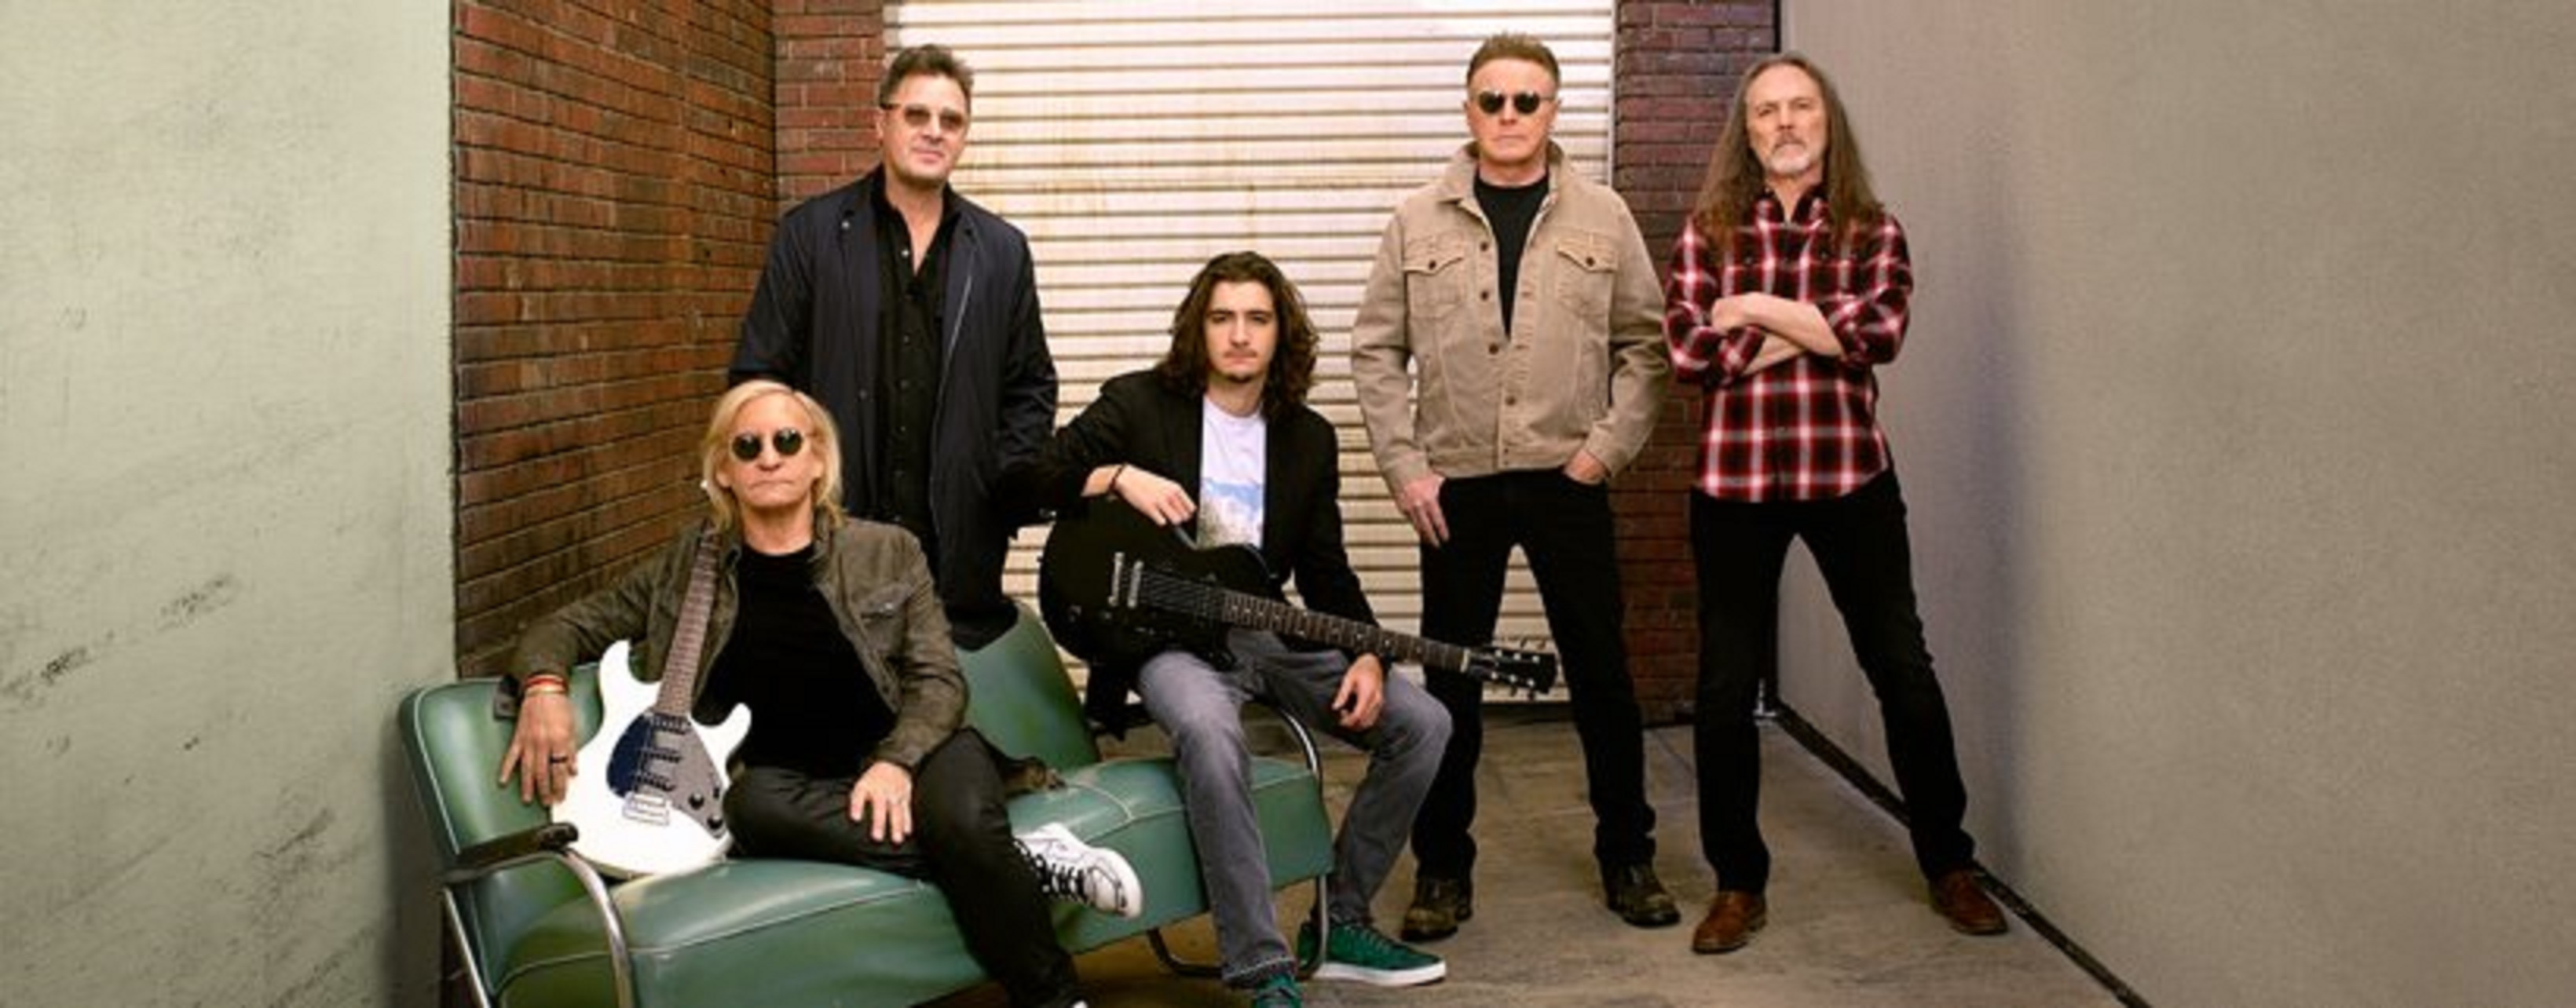 Eagles Announce Rescheduled 'Hotel California' 2020 Tour Dates